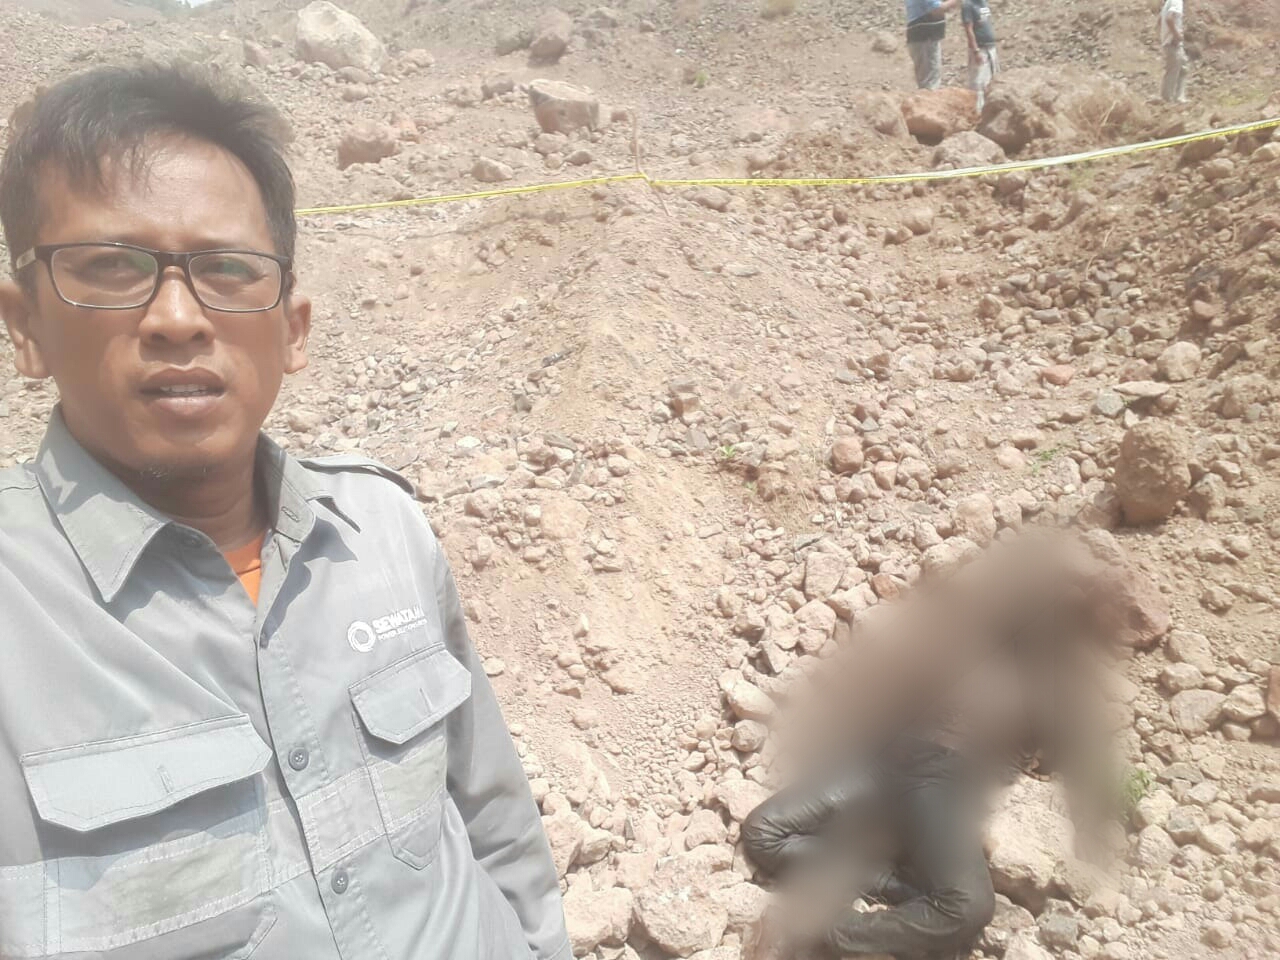 Tampak sesosok mayat pria tanpa identitas (diblur) ditemukan warga di lokasi galian batu milik PT Sani Persana di Kecamatan Ciwandan, Cilegon.